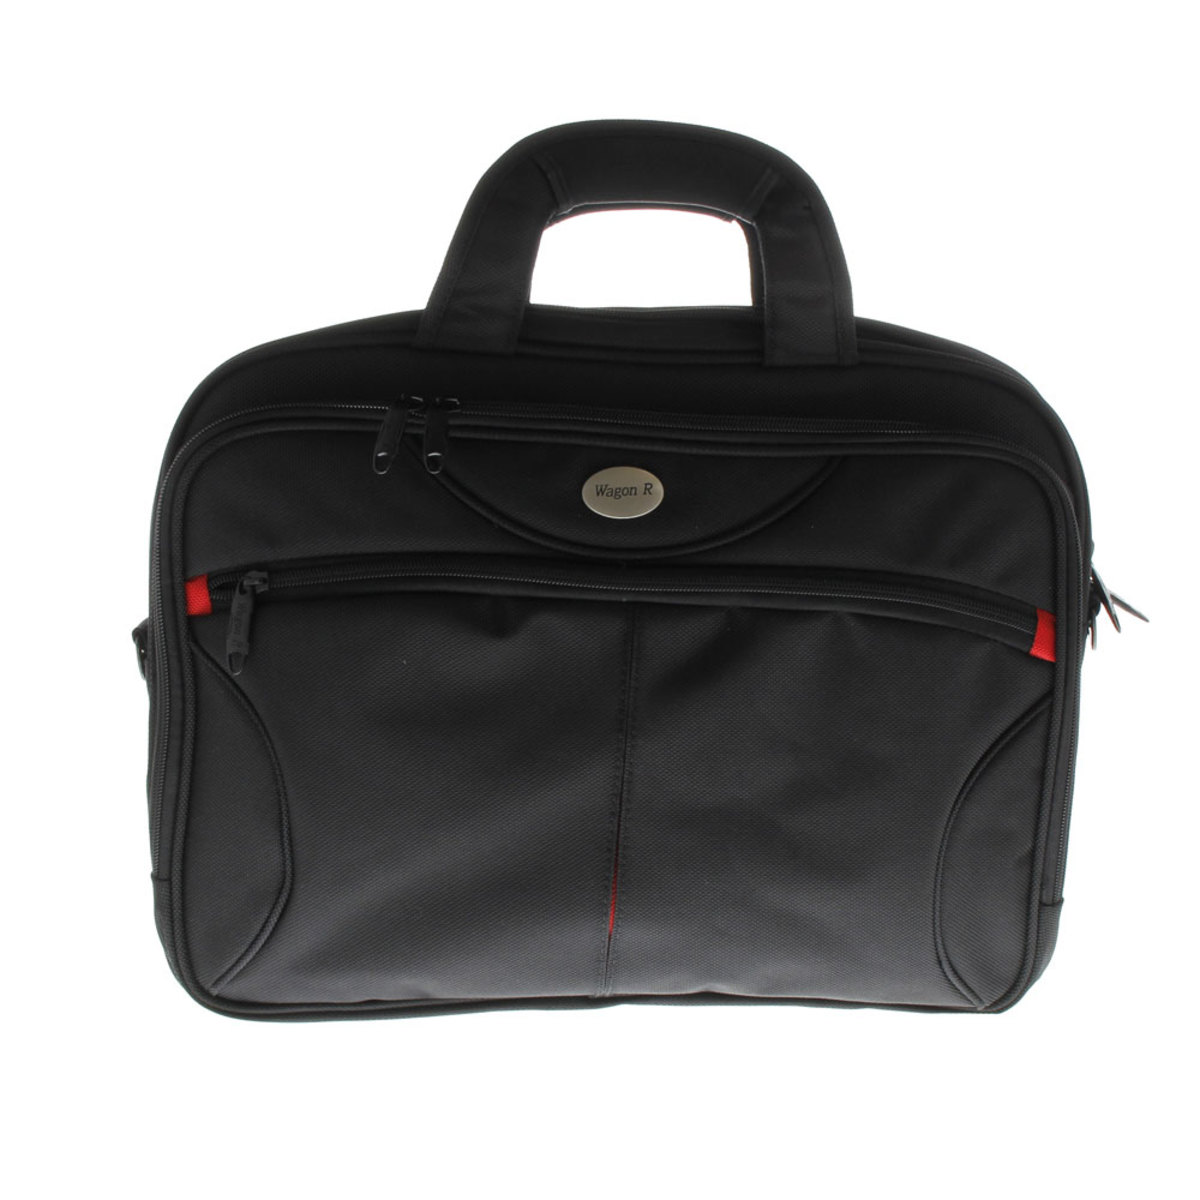 Wagon RLaptop Bag TZ57-1